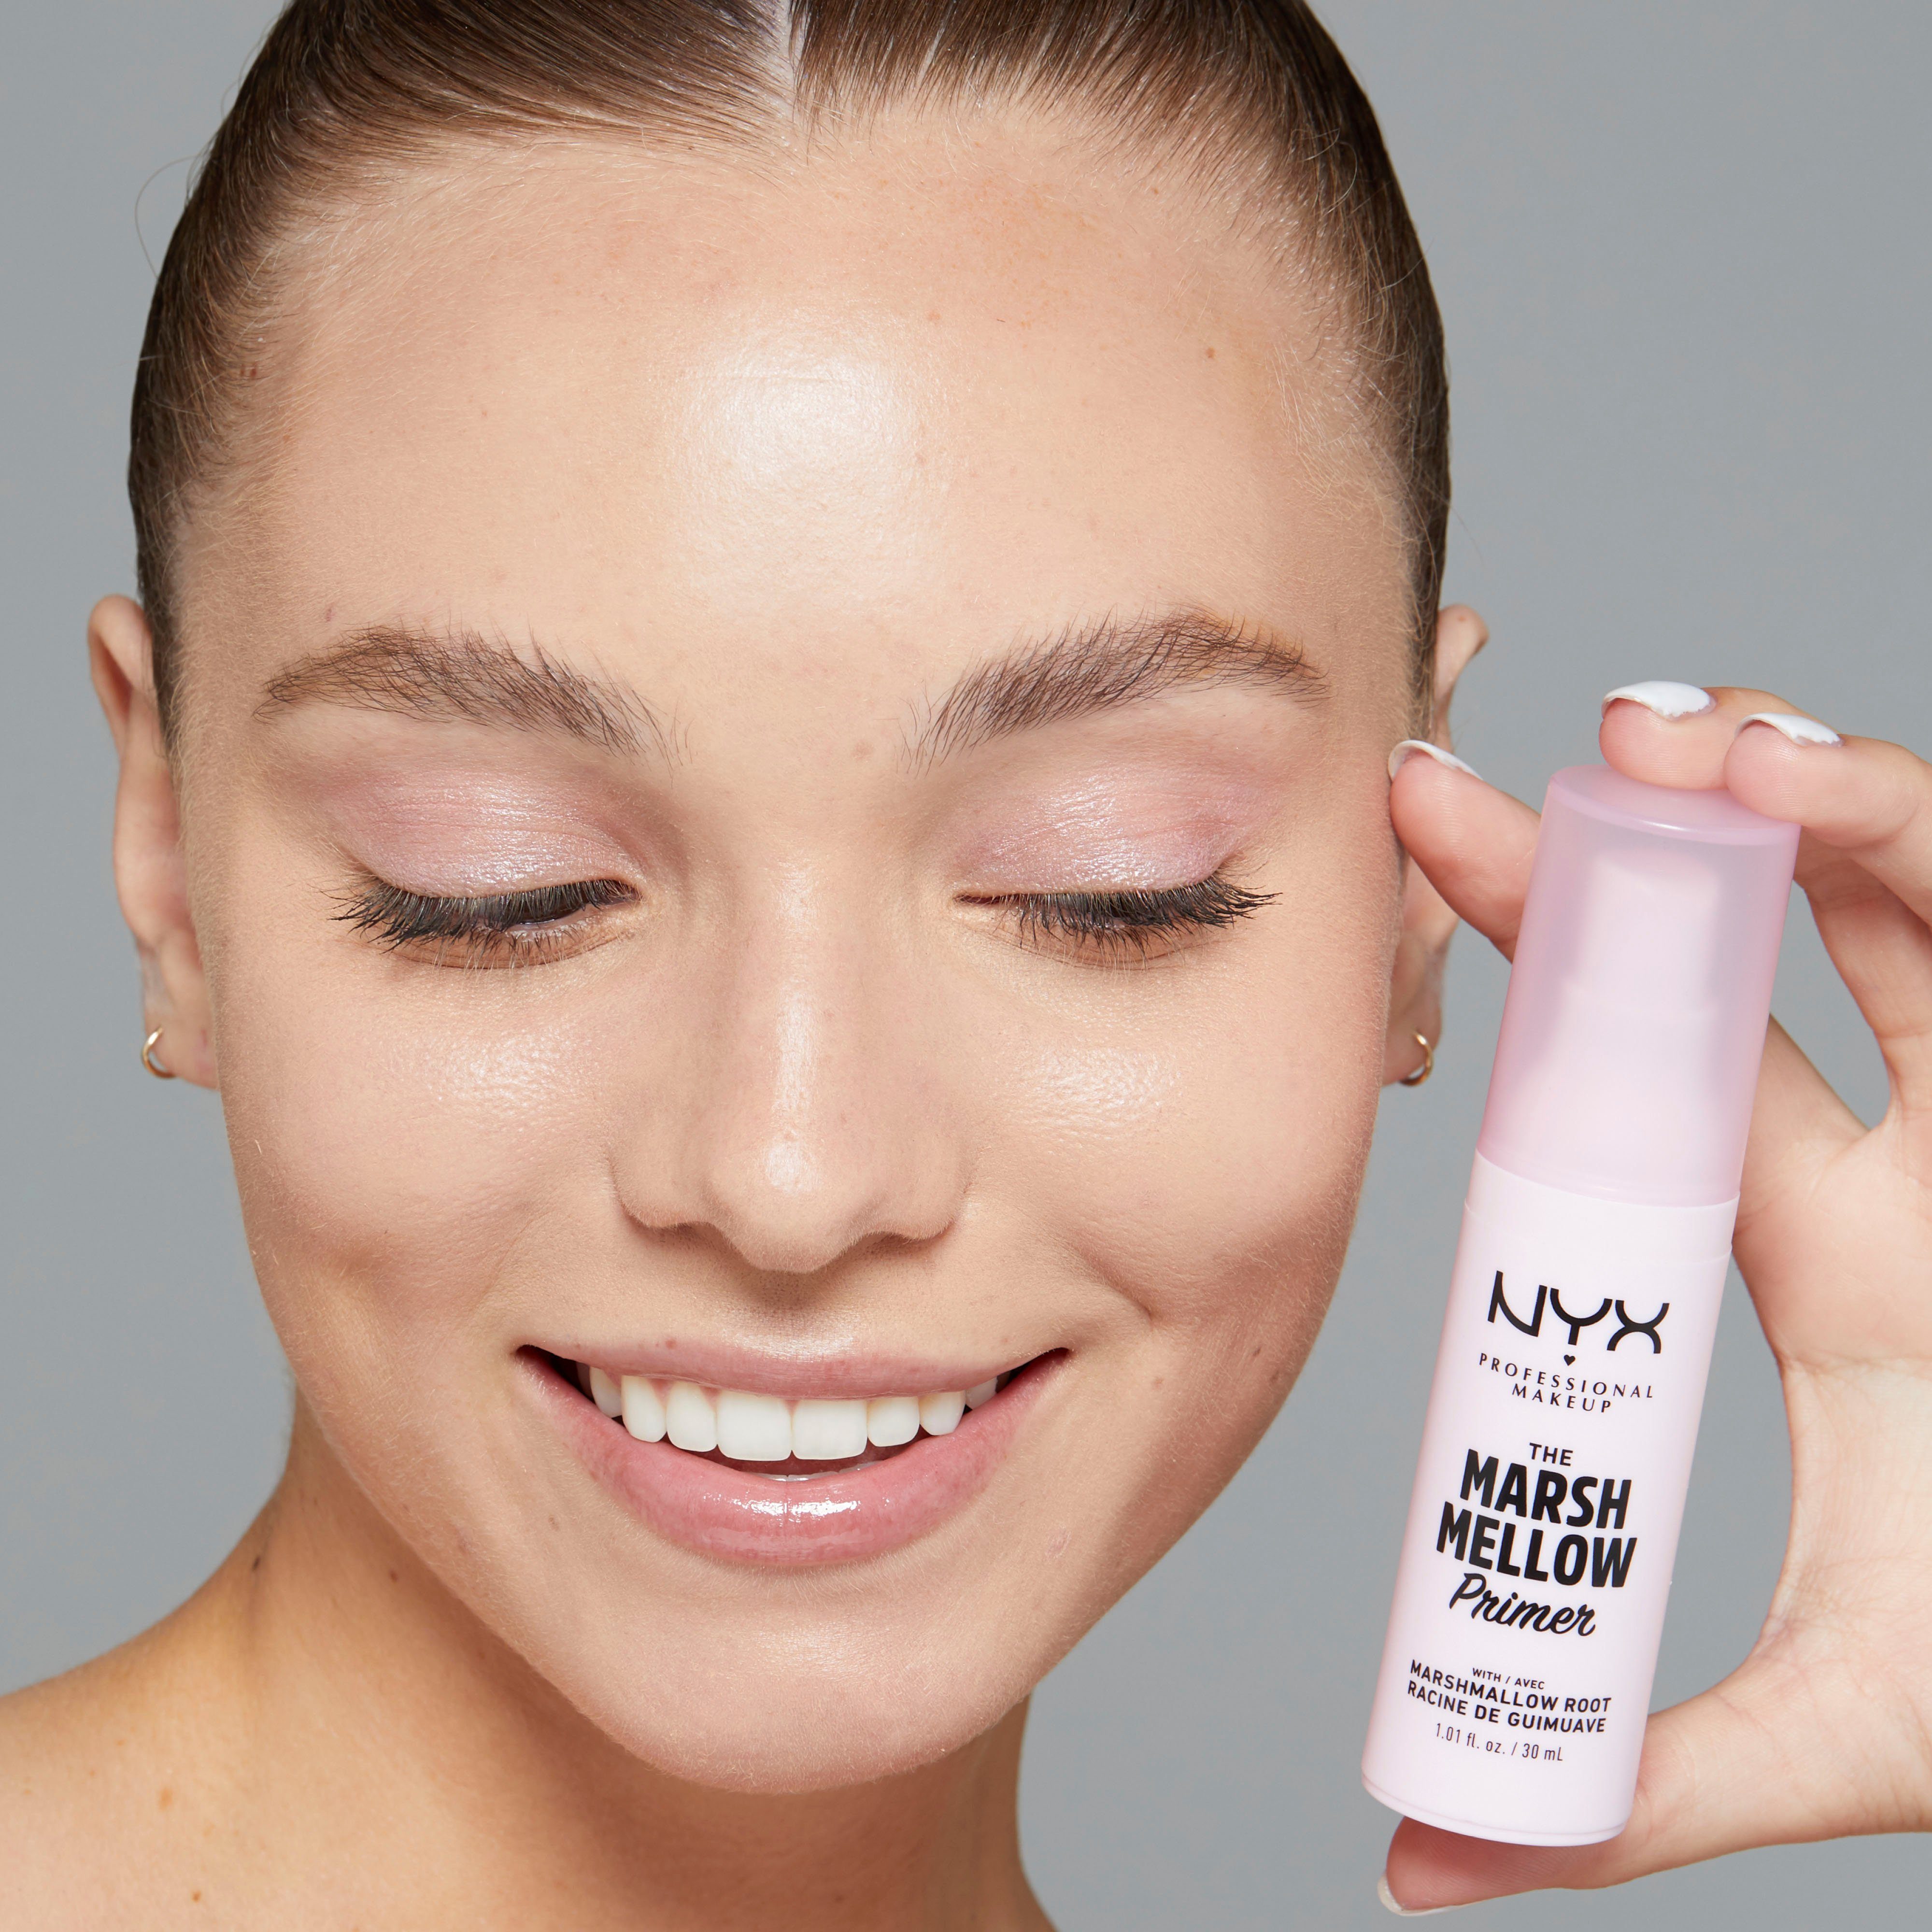 NYX Primer NYX Marsh Smooth Mallow Primer Makeup Professional